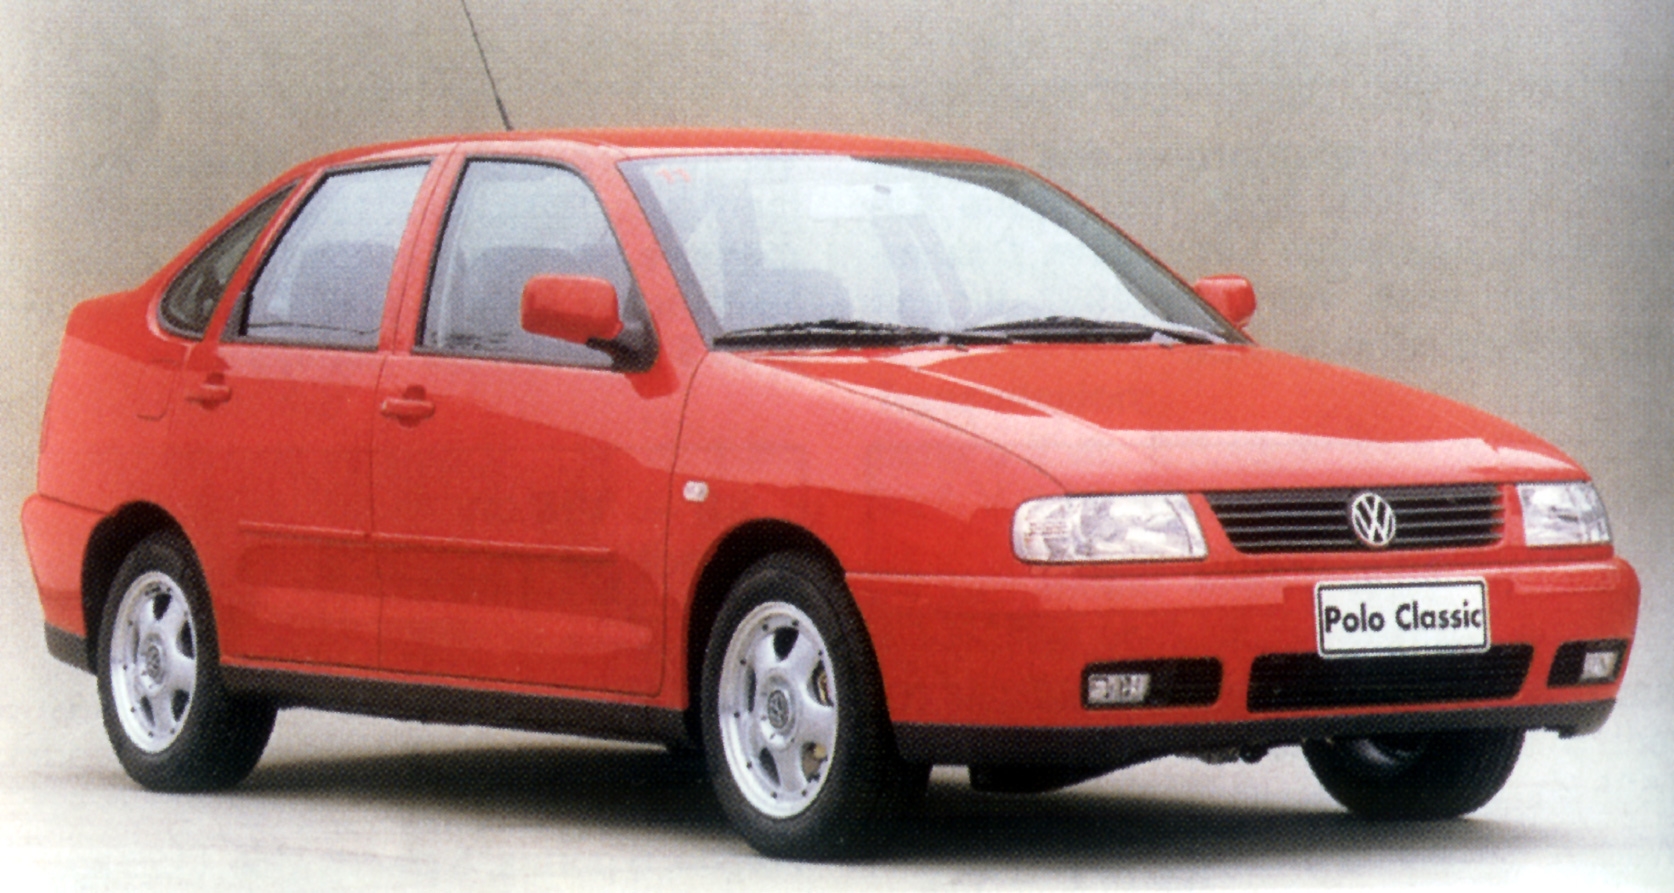 Volkswagen Polo Classic vermelho.